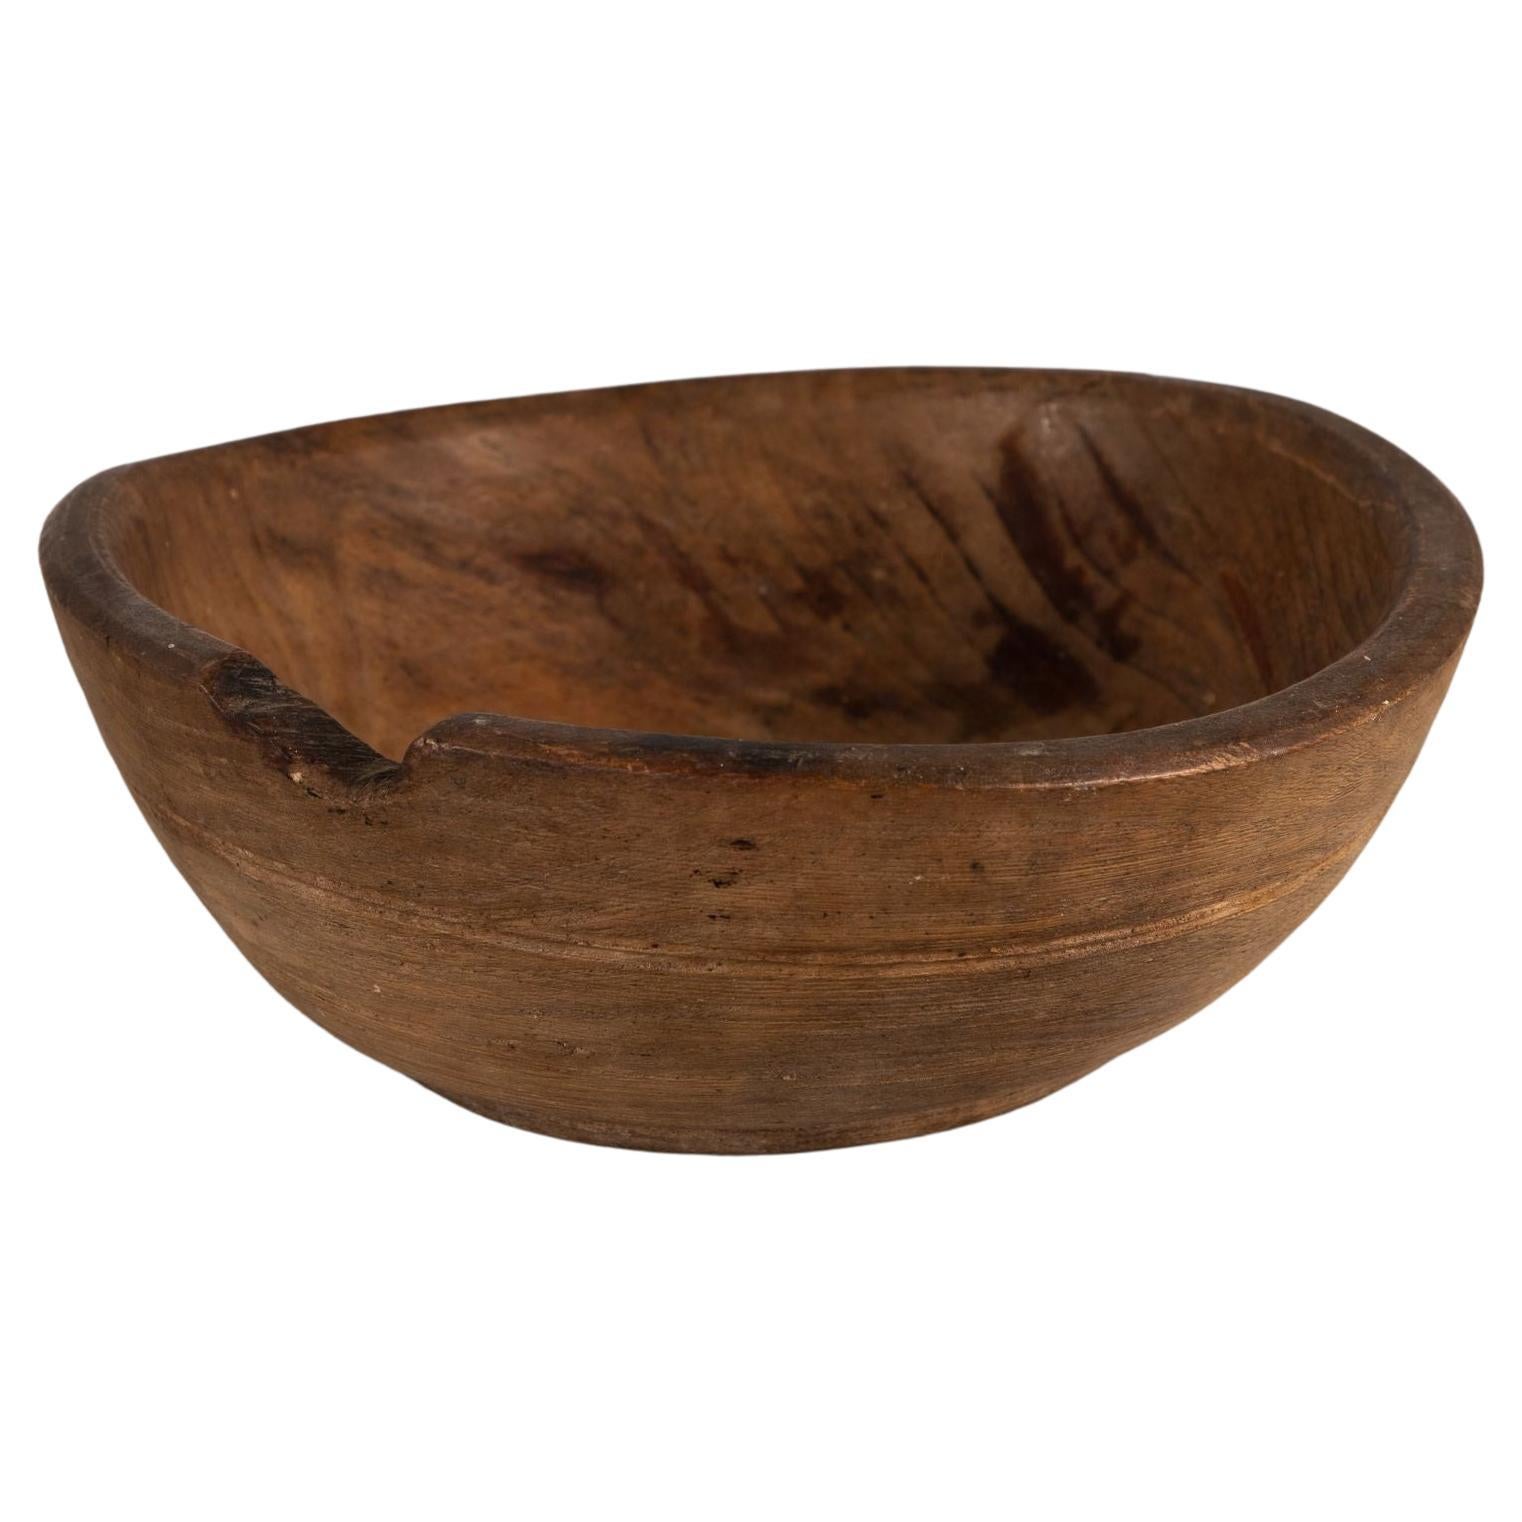 Vintage Rustic Dugout Wooden Bowl